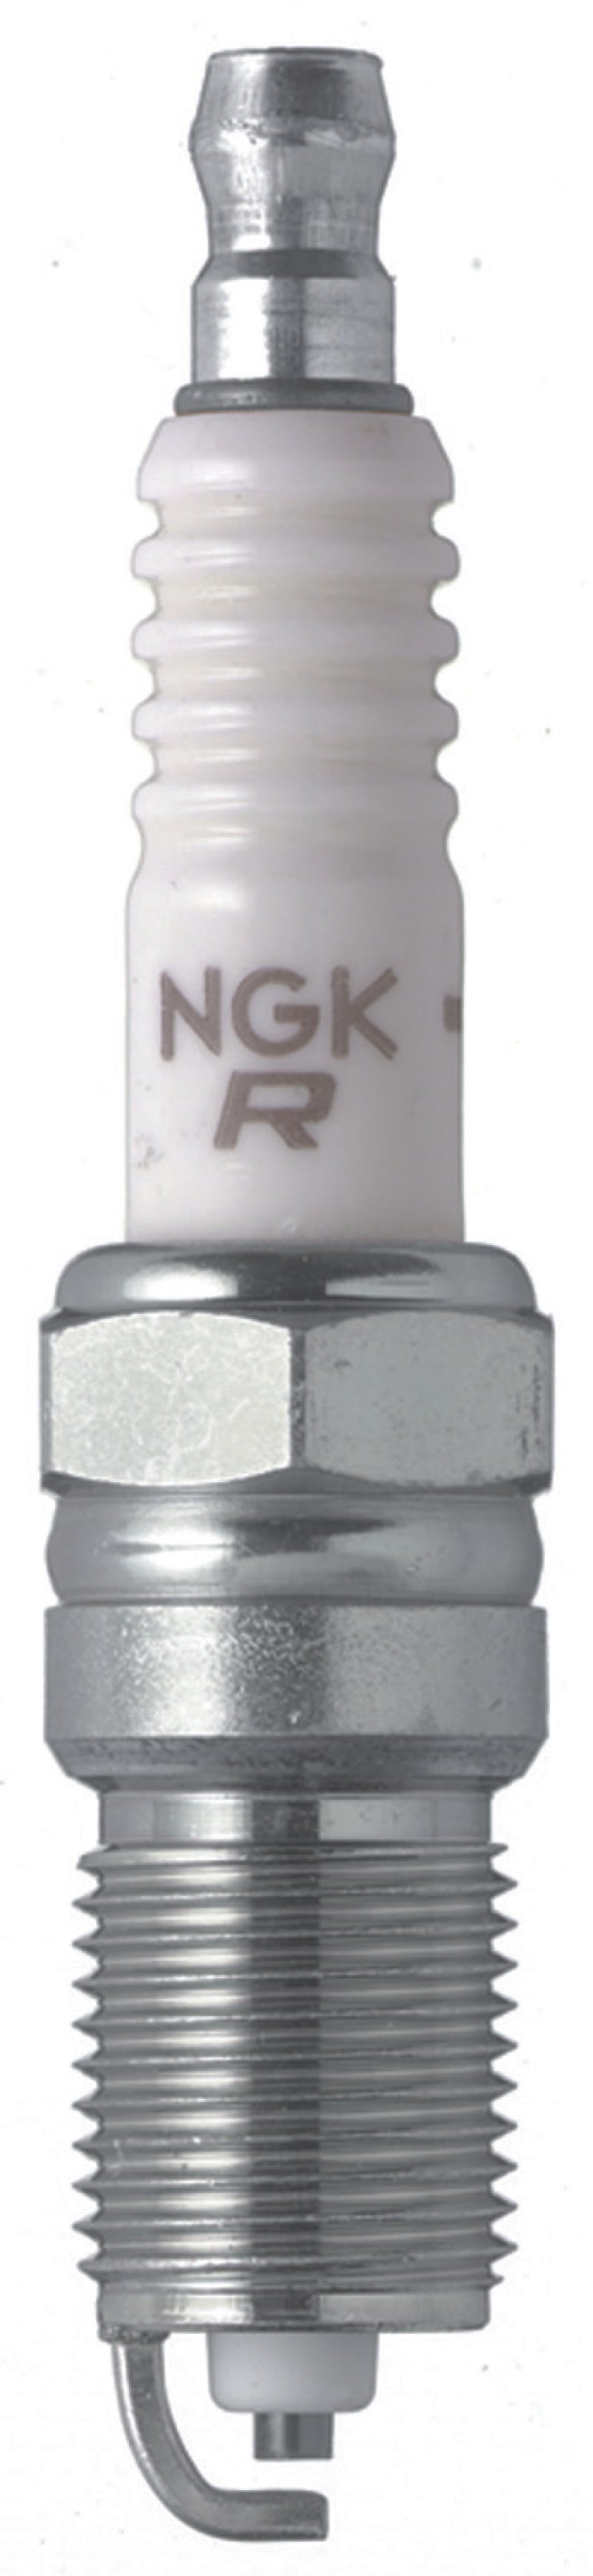 NGK V-Power Spark Plug Box of 4 (TR55).